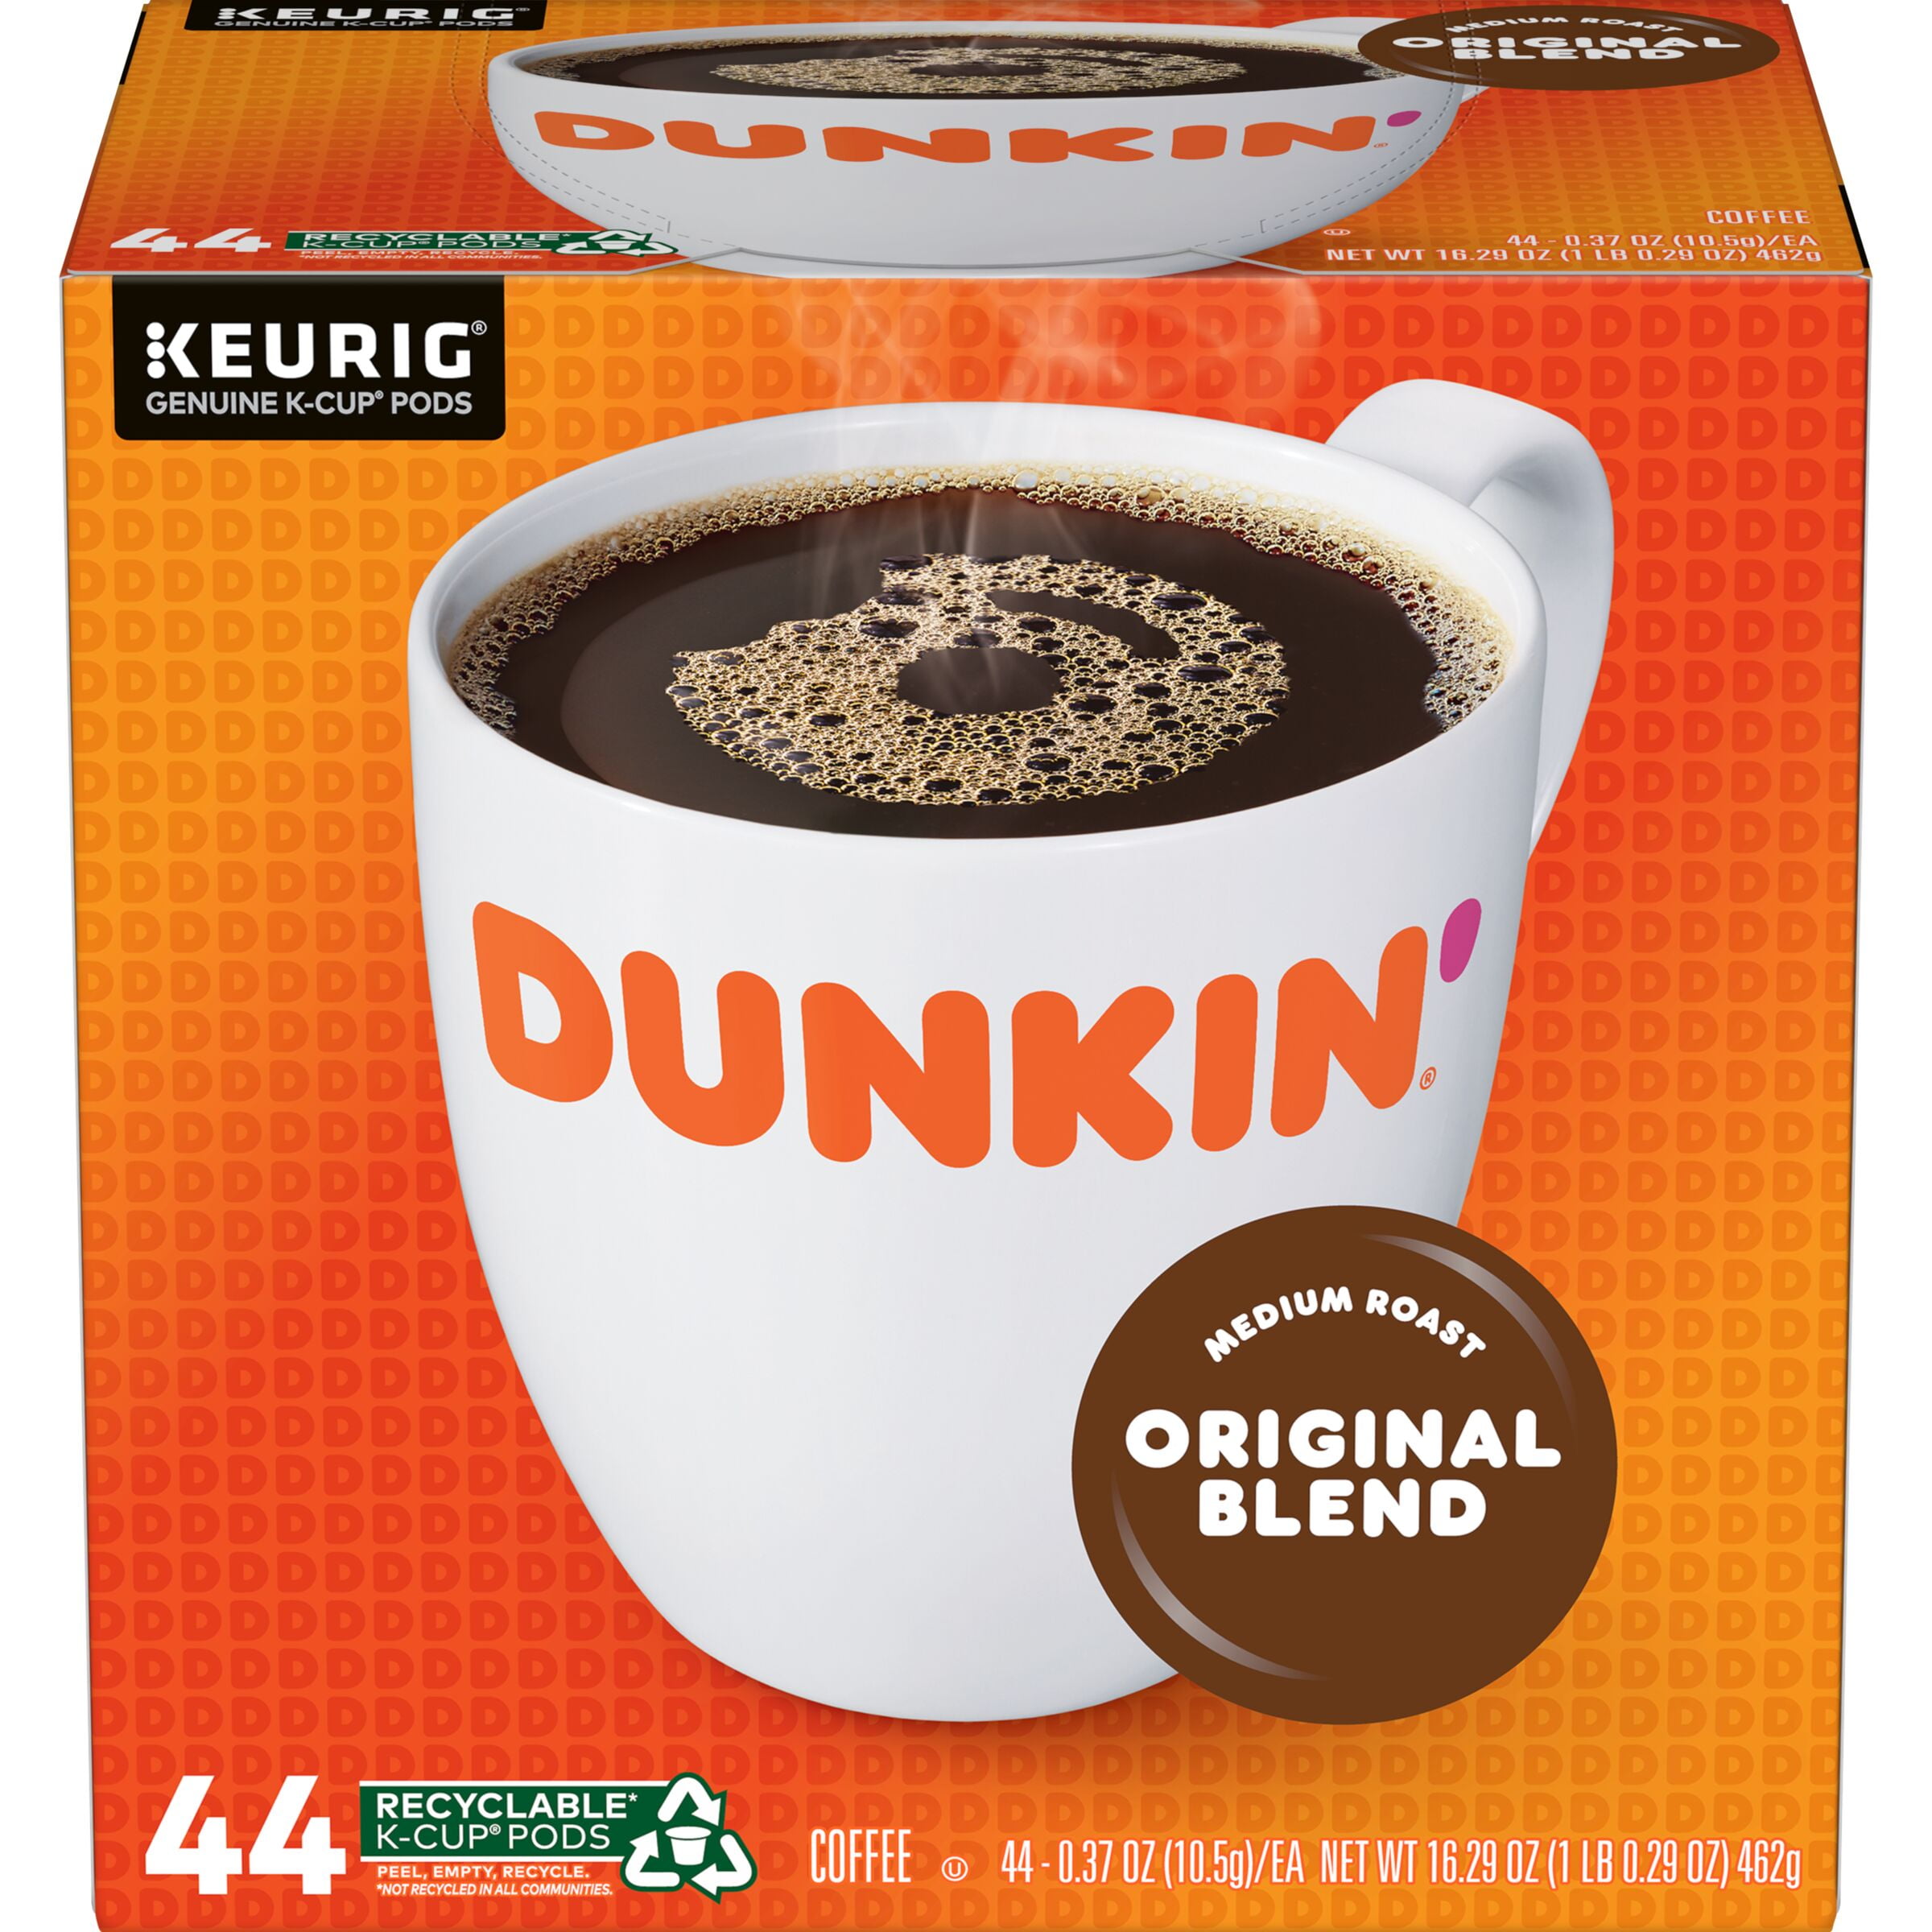 Dunkin' Original Blend K-Cup Pods for Keurig K-Cup Brewers, Medium Roast Coffee, 44-Count (Packaging May Vary)